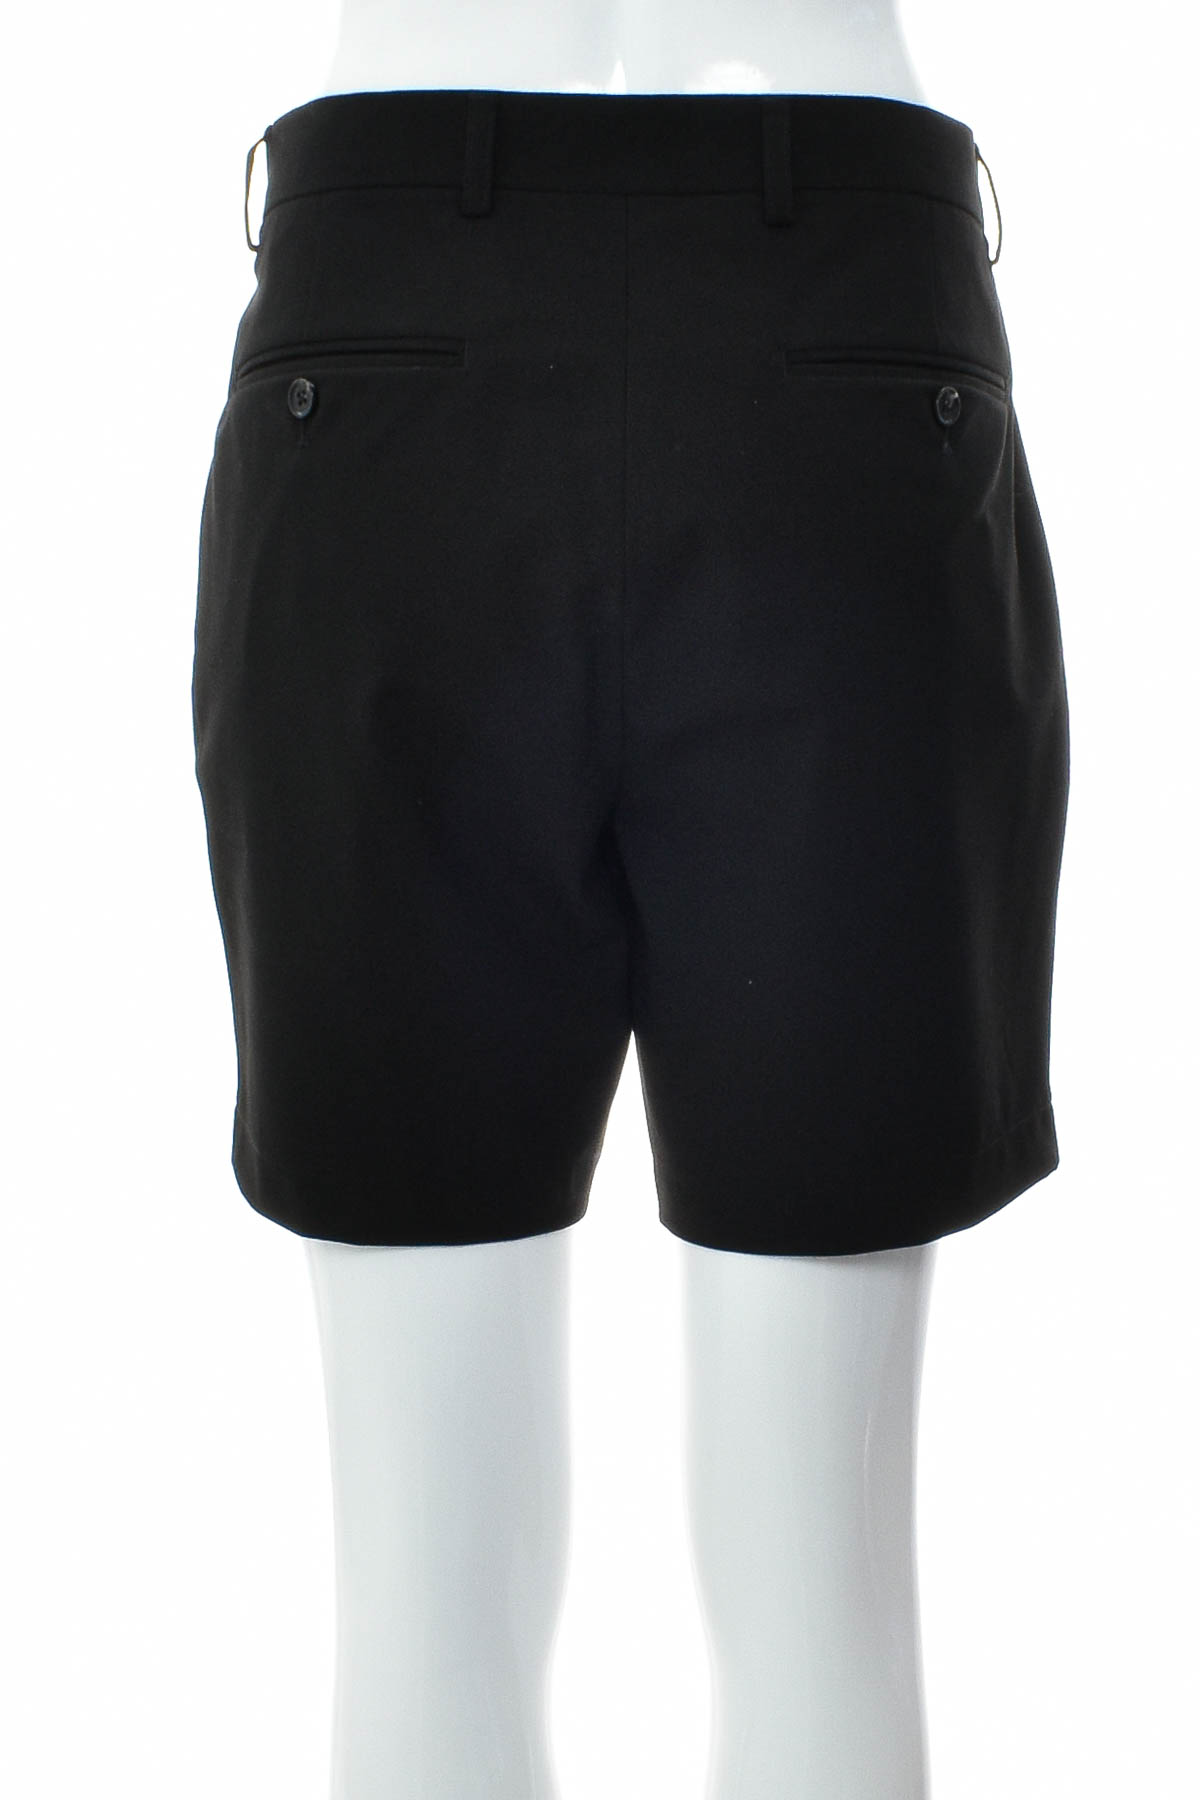 Men's shorts - Minimum - 1